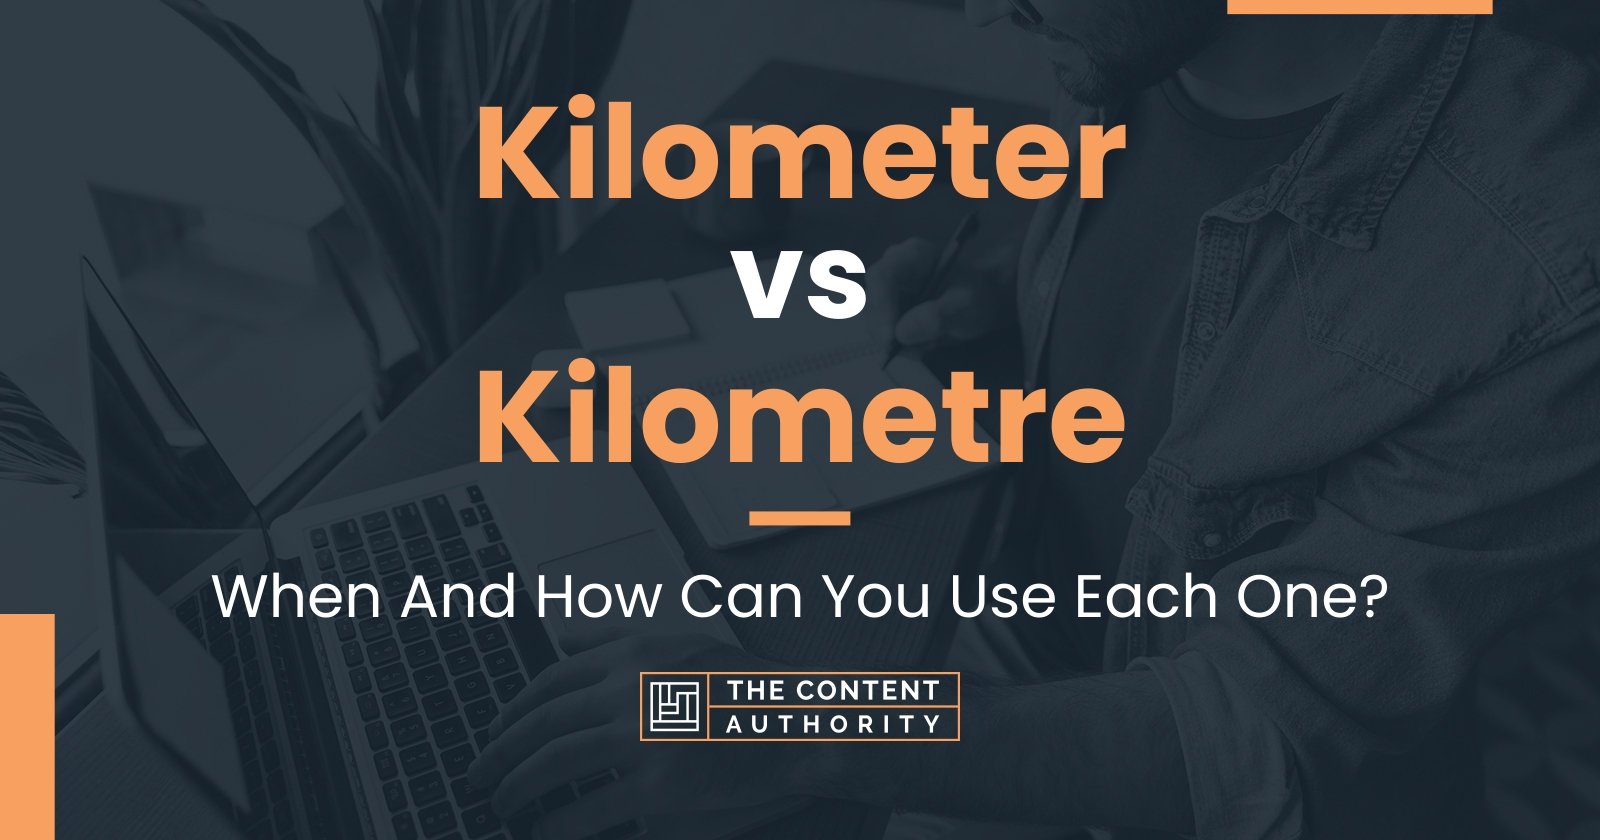 Kilometer vs Kilometre: When And How Can You Use Each One?